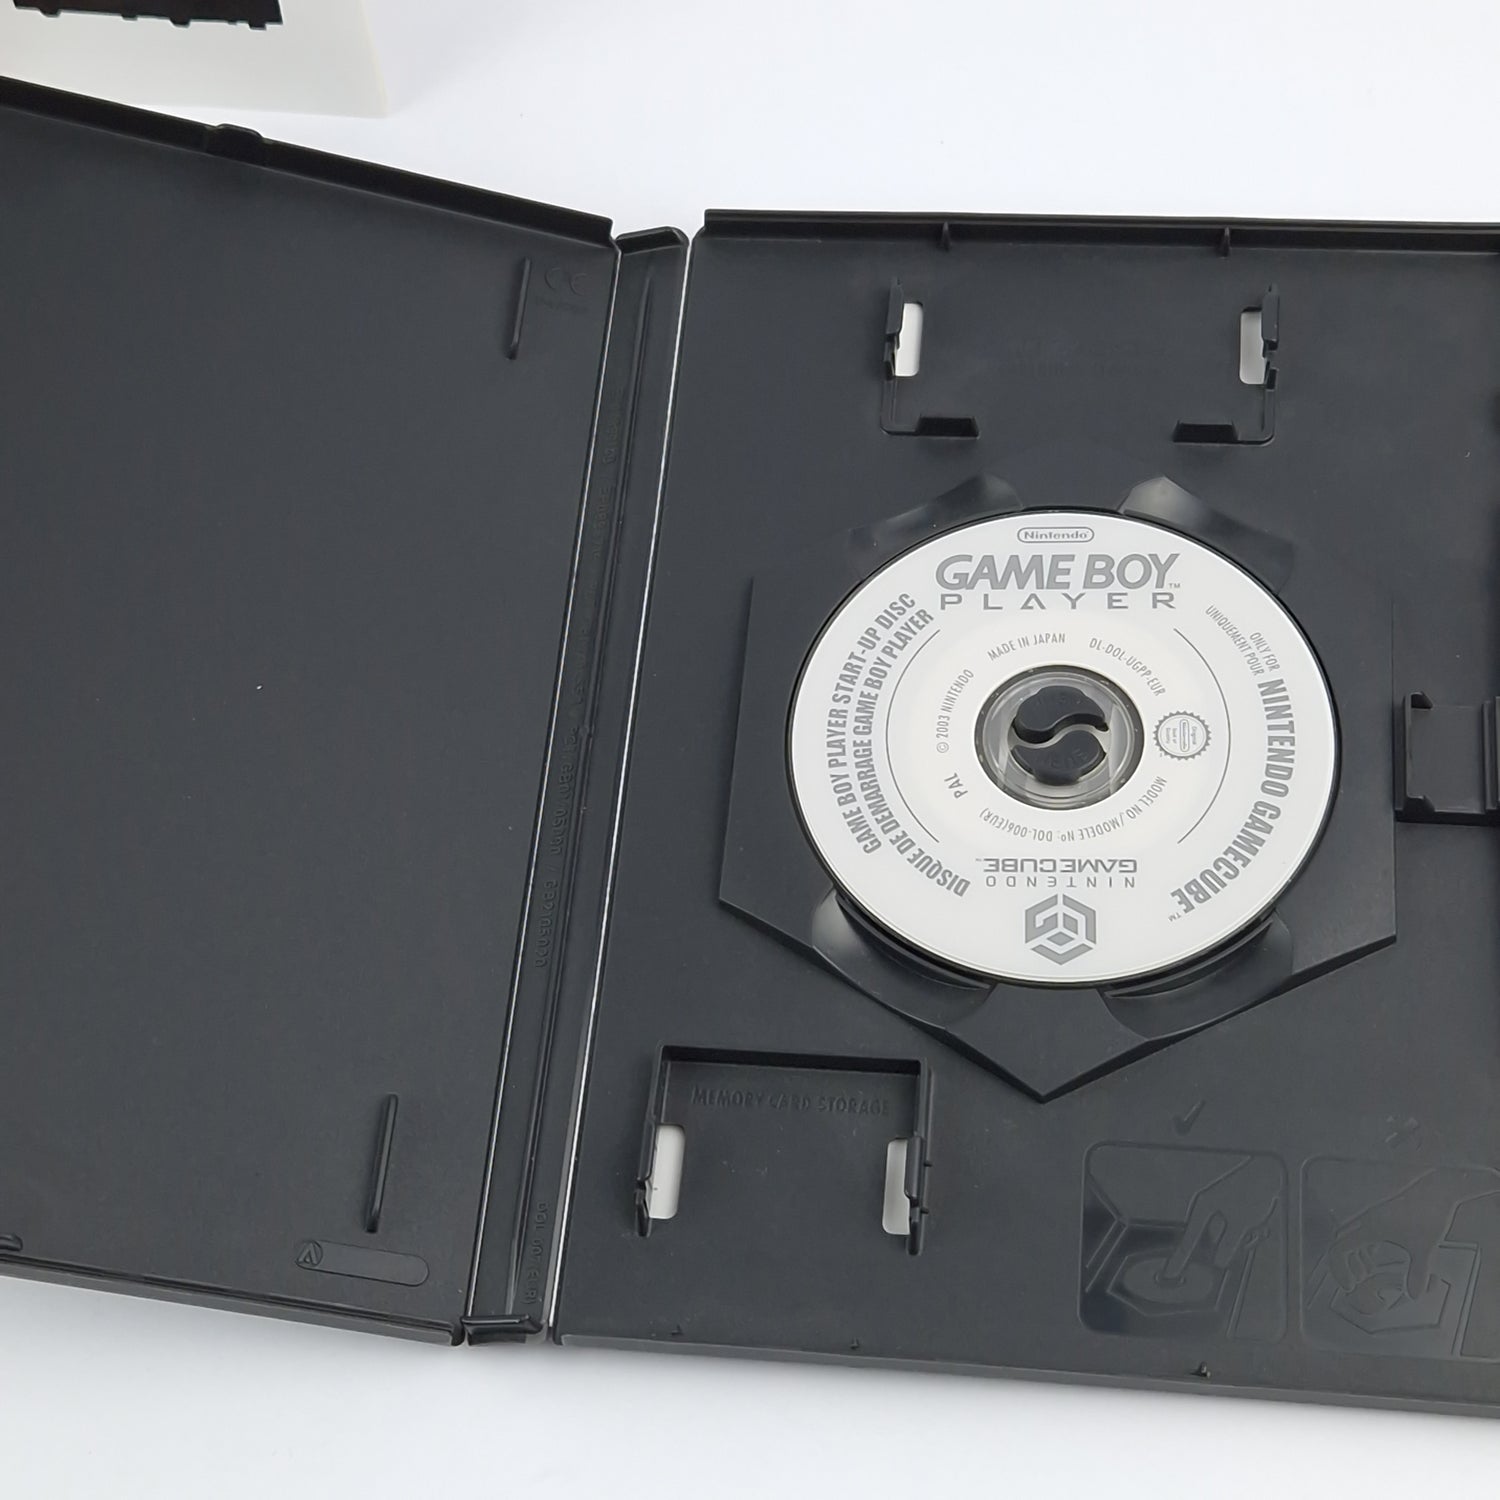 Nintendo Gamecube Konsole : Game Boy Player Pak - Bundle Set OVP - PAL Console